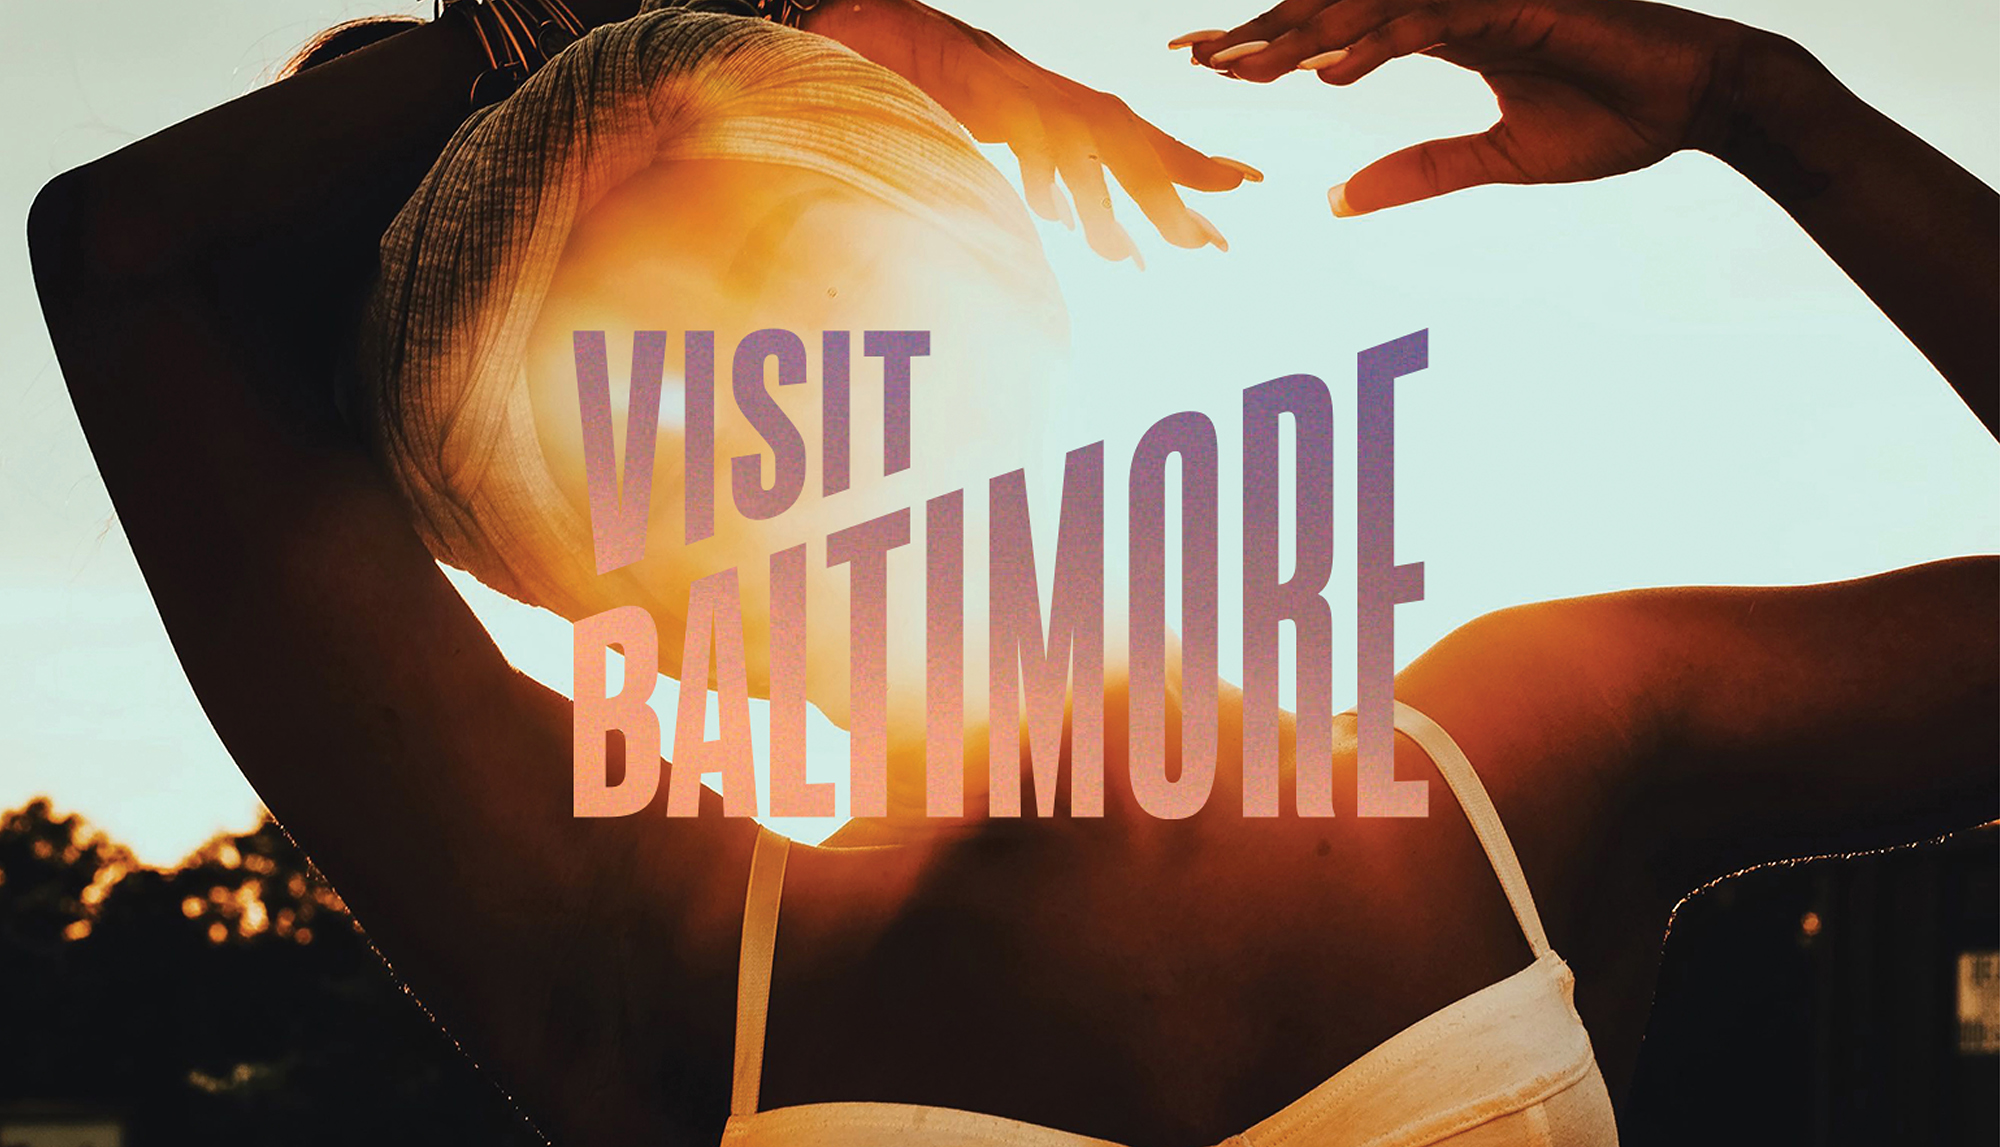 visit baltimore campaign